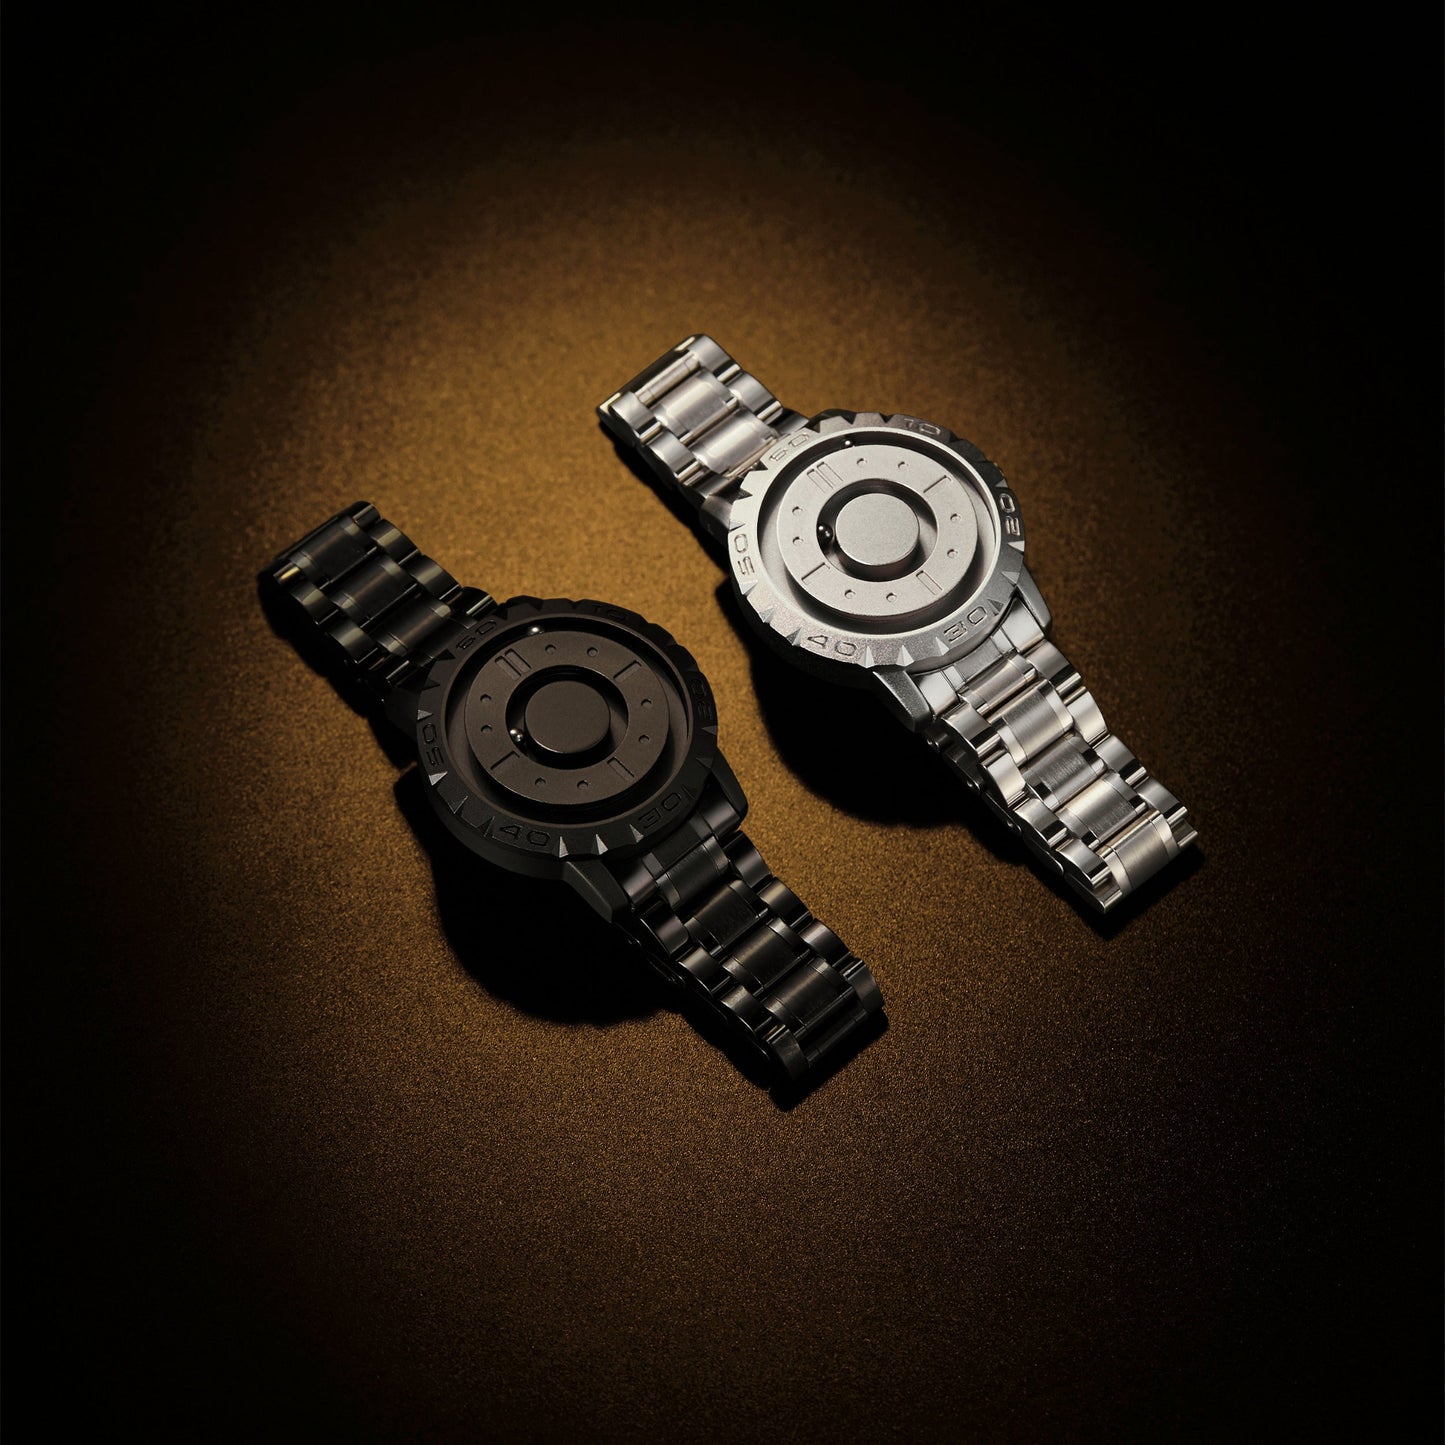 Zenit Black - Gravity Watch